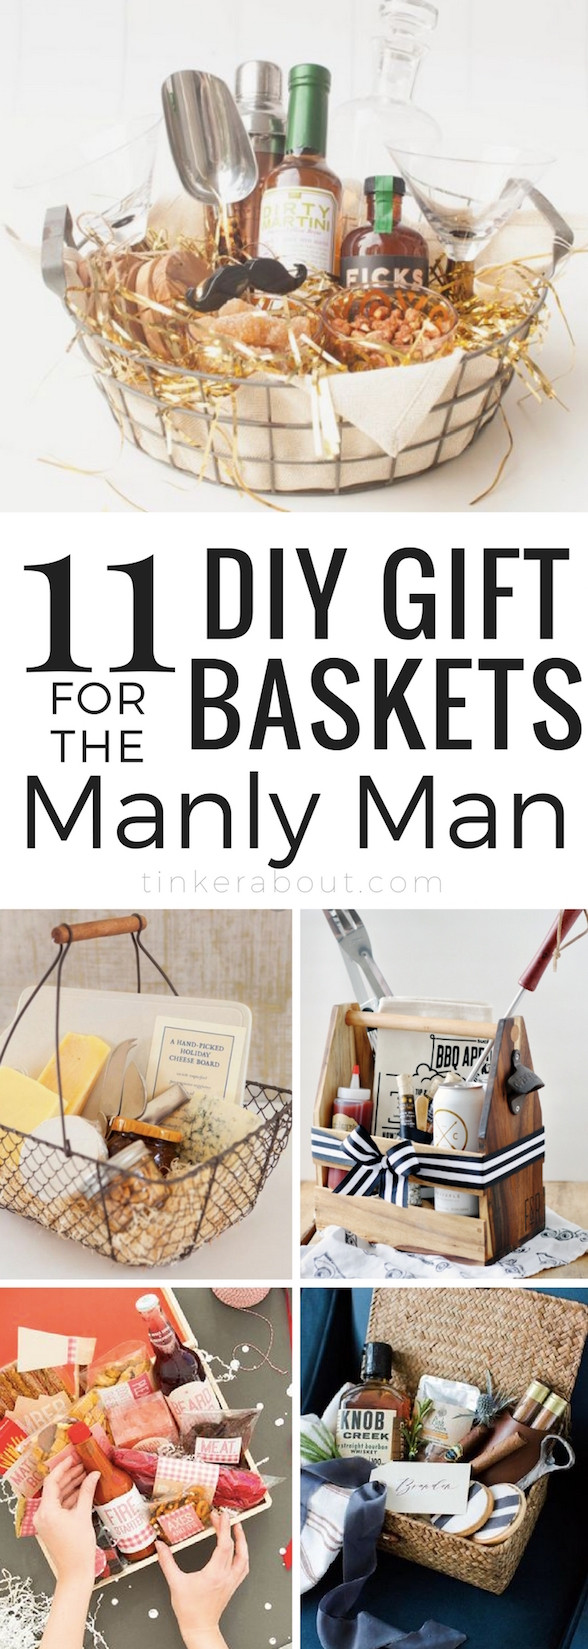 Men Gift Basket Ideas
 11 Best Gift Basket Ideas For Him